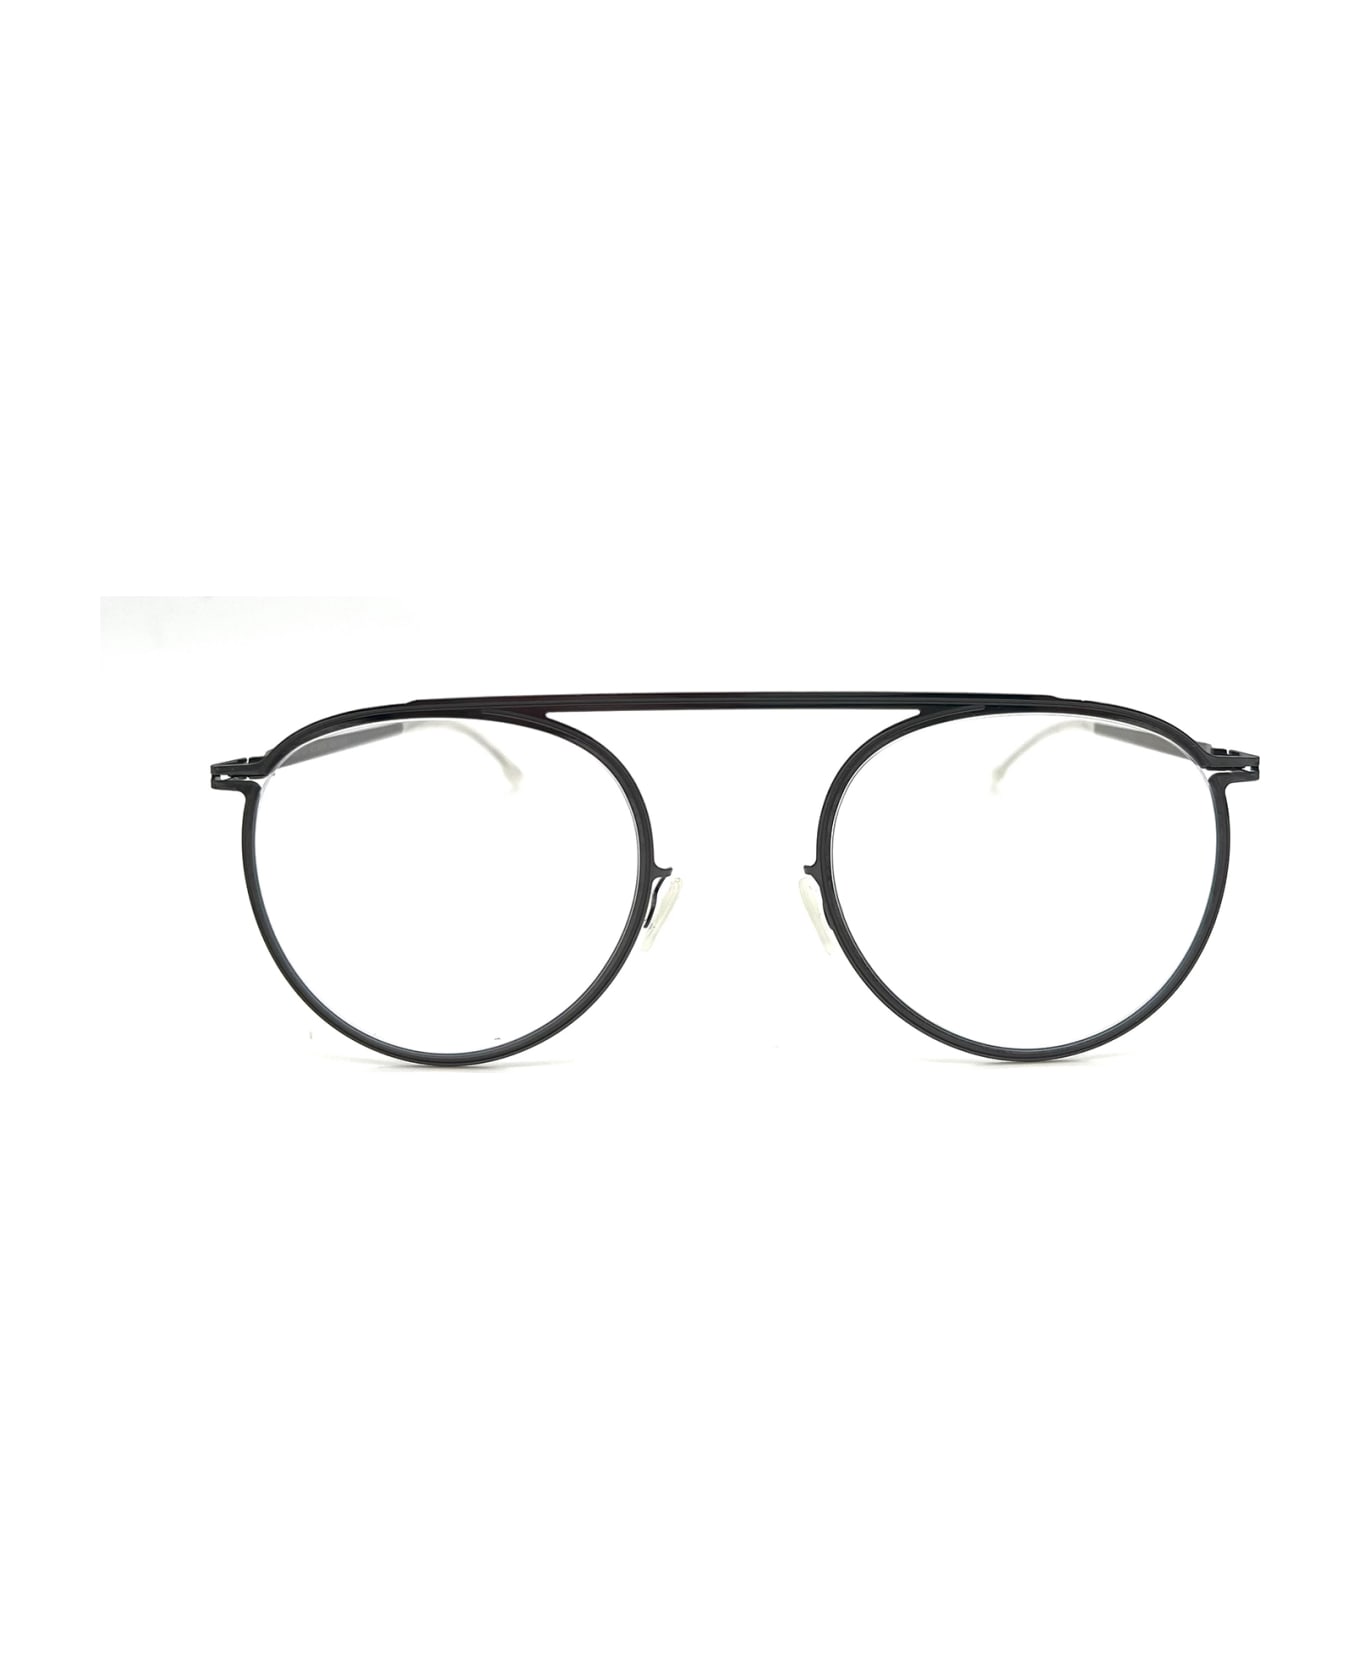 Mykita STUDIO 6.5 Eyewear - Shiny Graphite/mole G